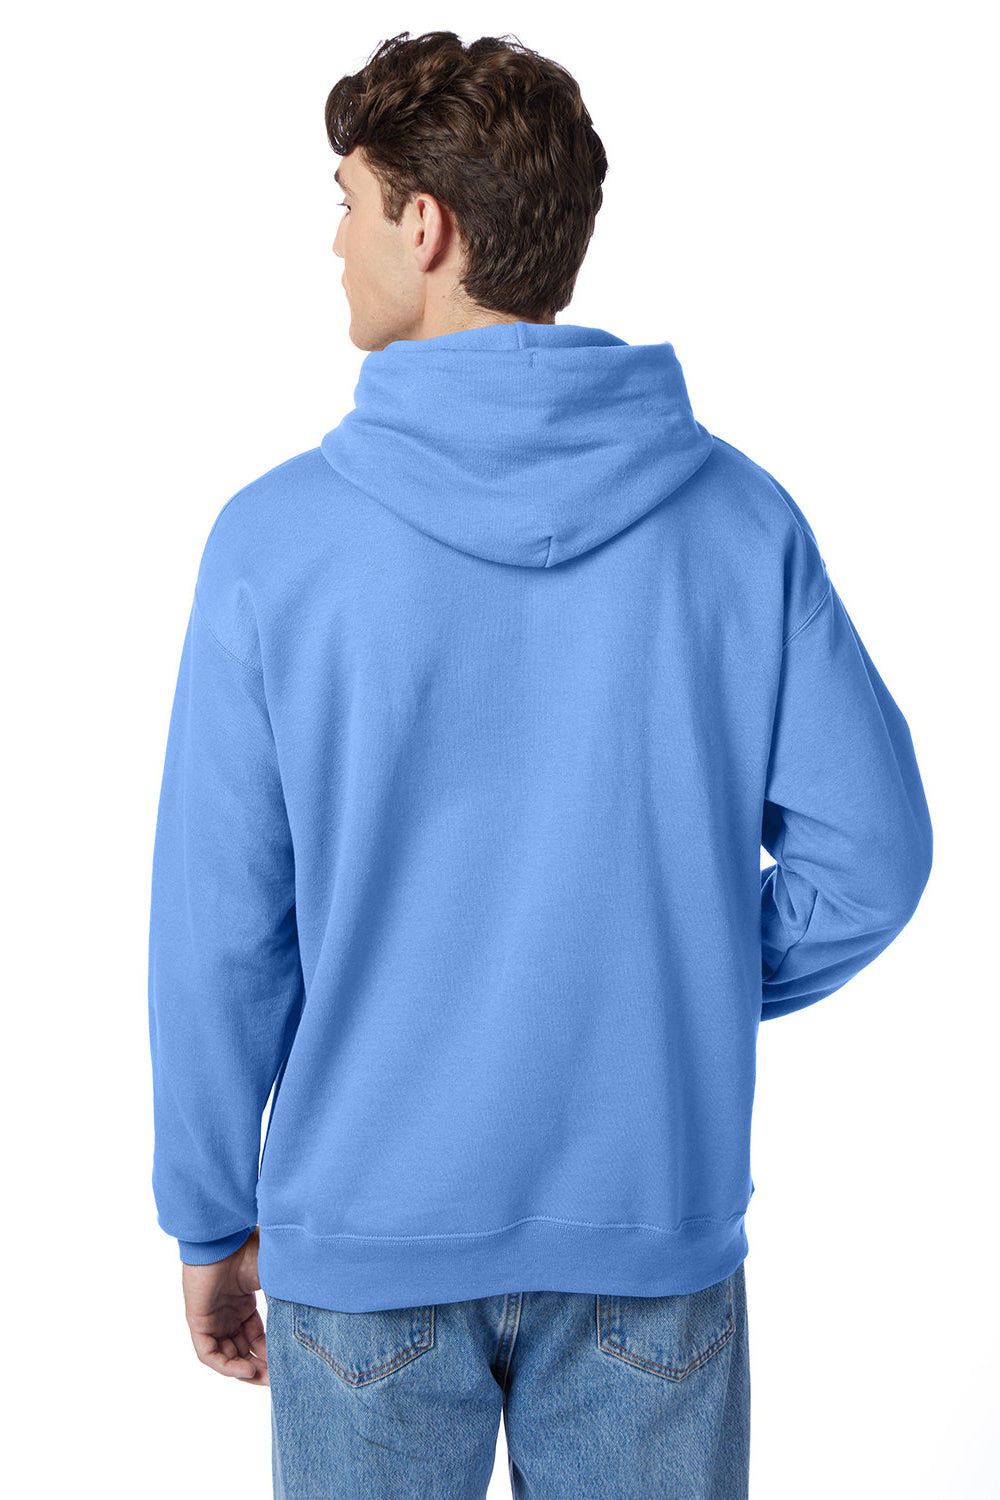 Hanes P170 Mens EcoSmart Print Pro XP Hooded Sweatshirt Hoodie Carolina Blue Back